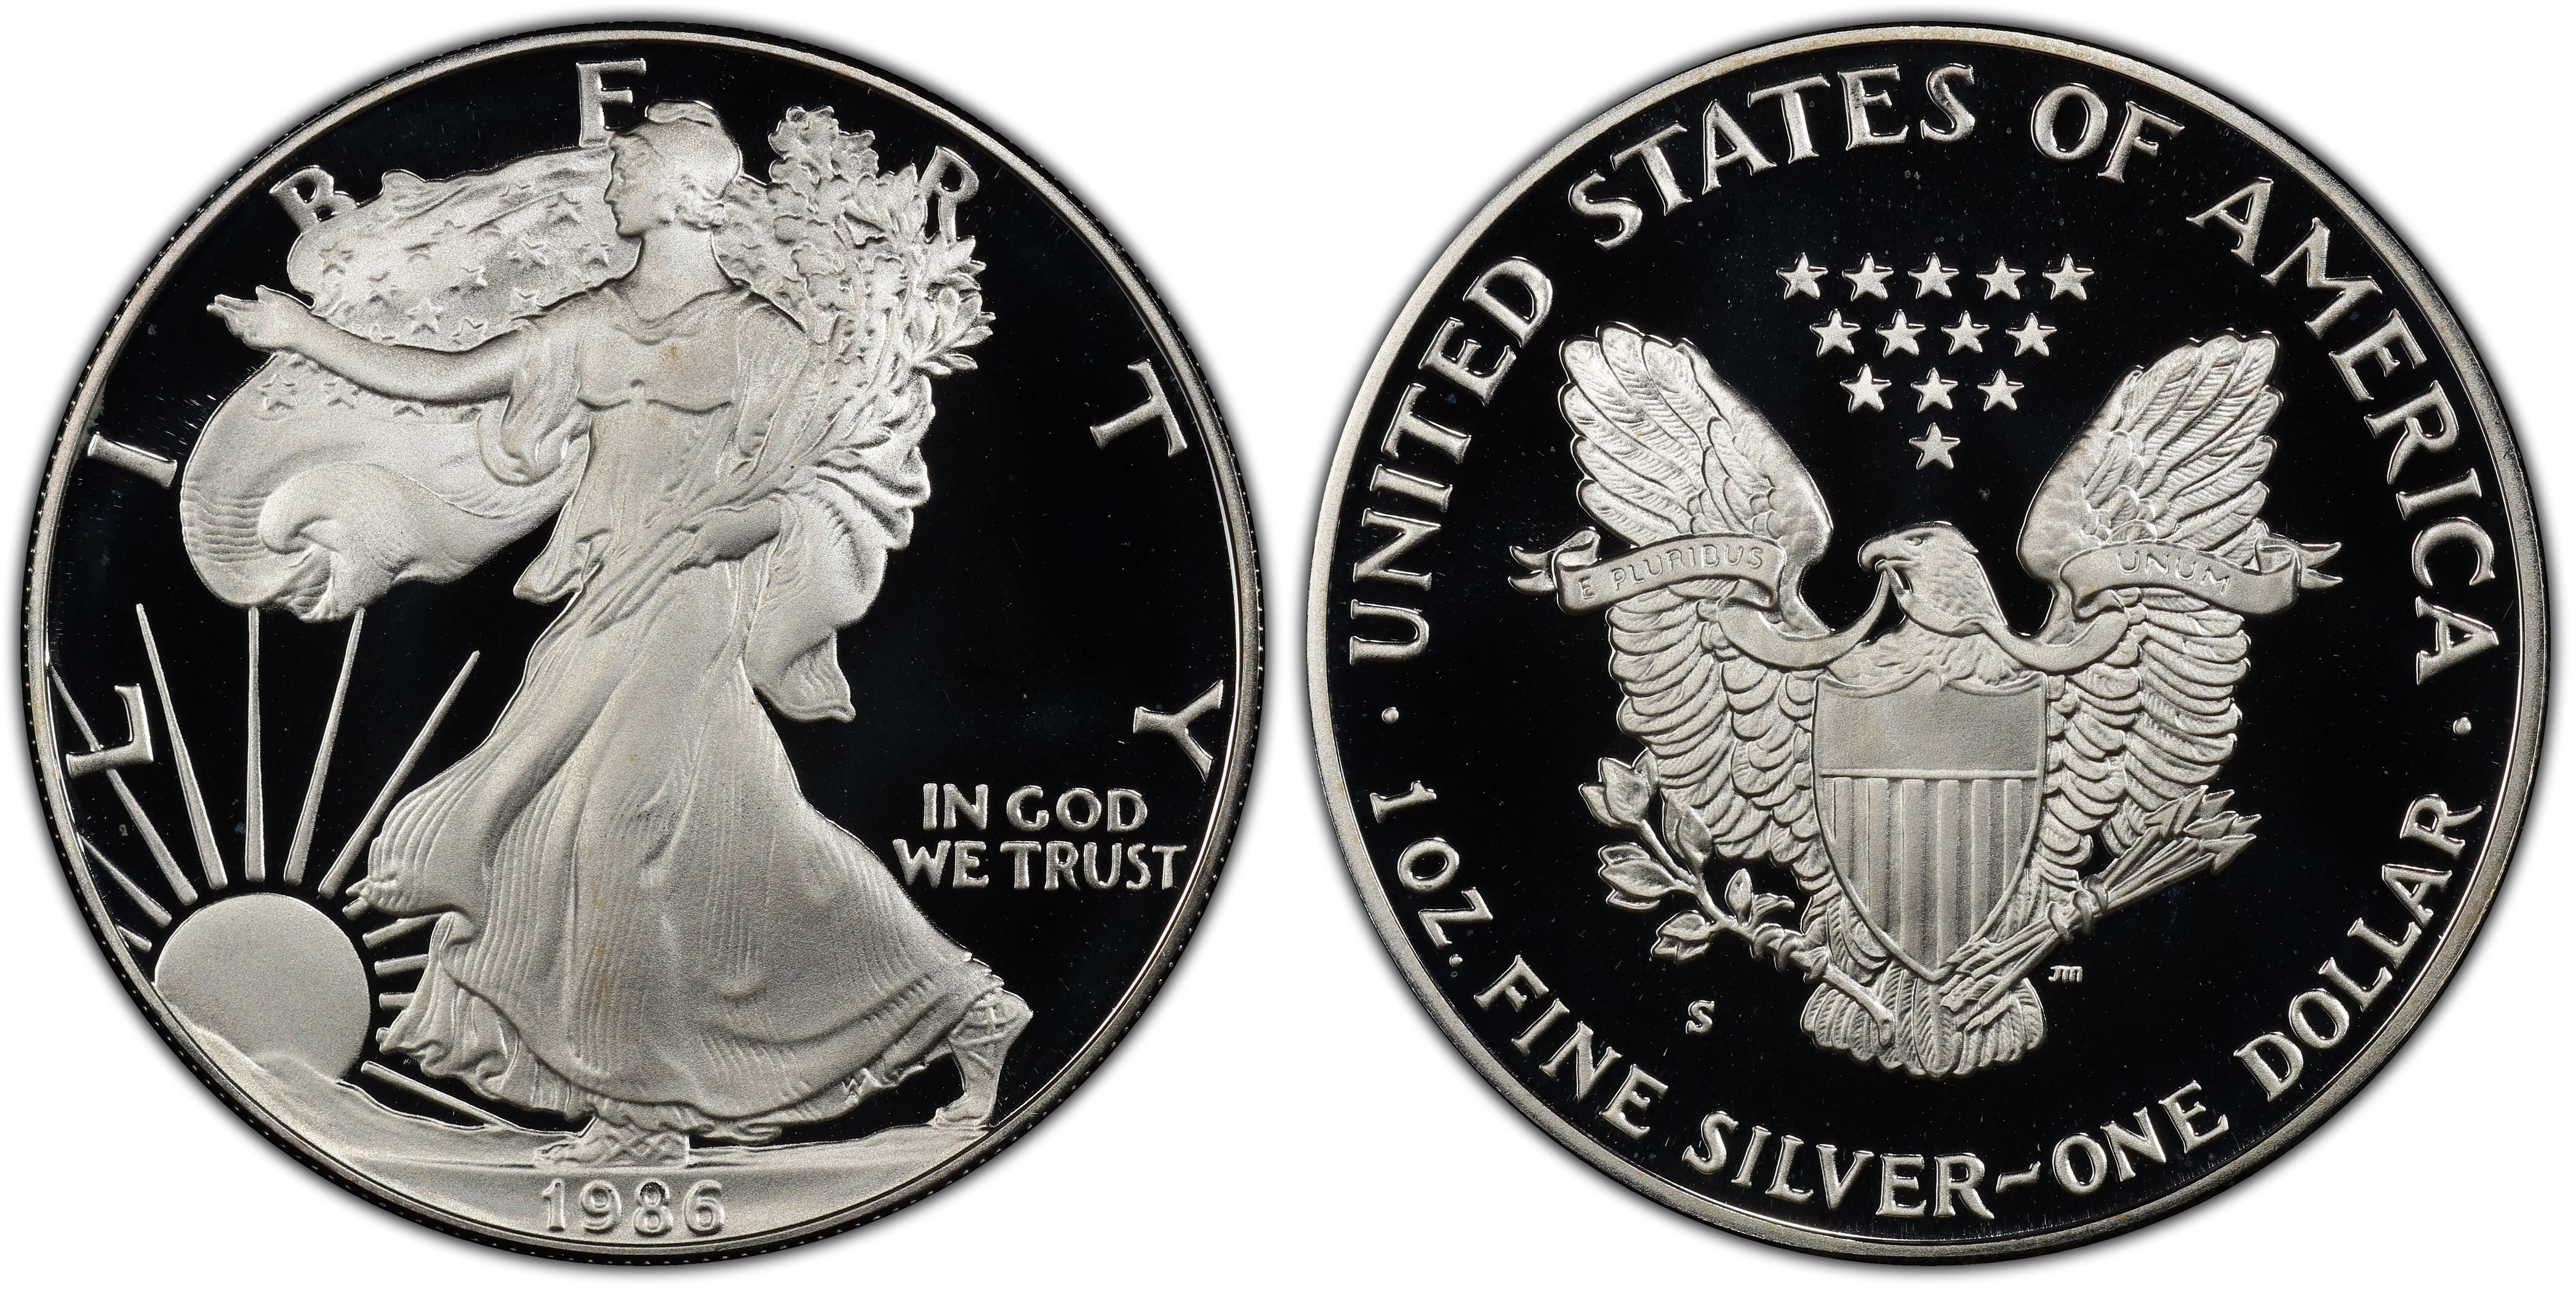 1990 S $1 Proof American Silver Eagle 1oz PCGS PR69DCAM Thomas Cleveland Native